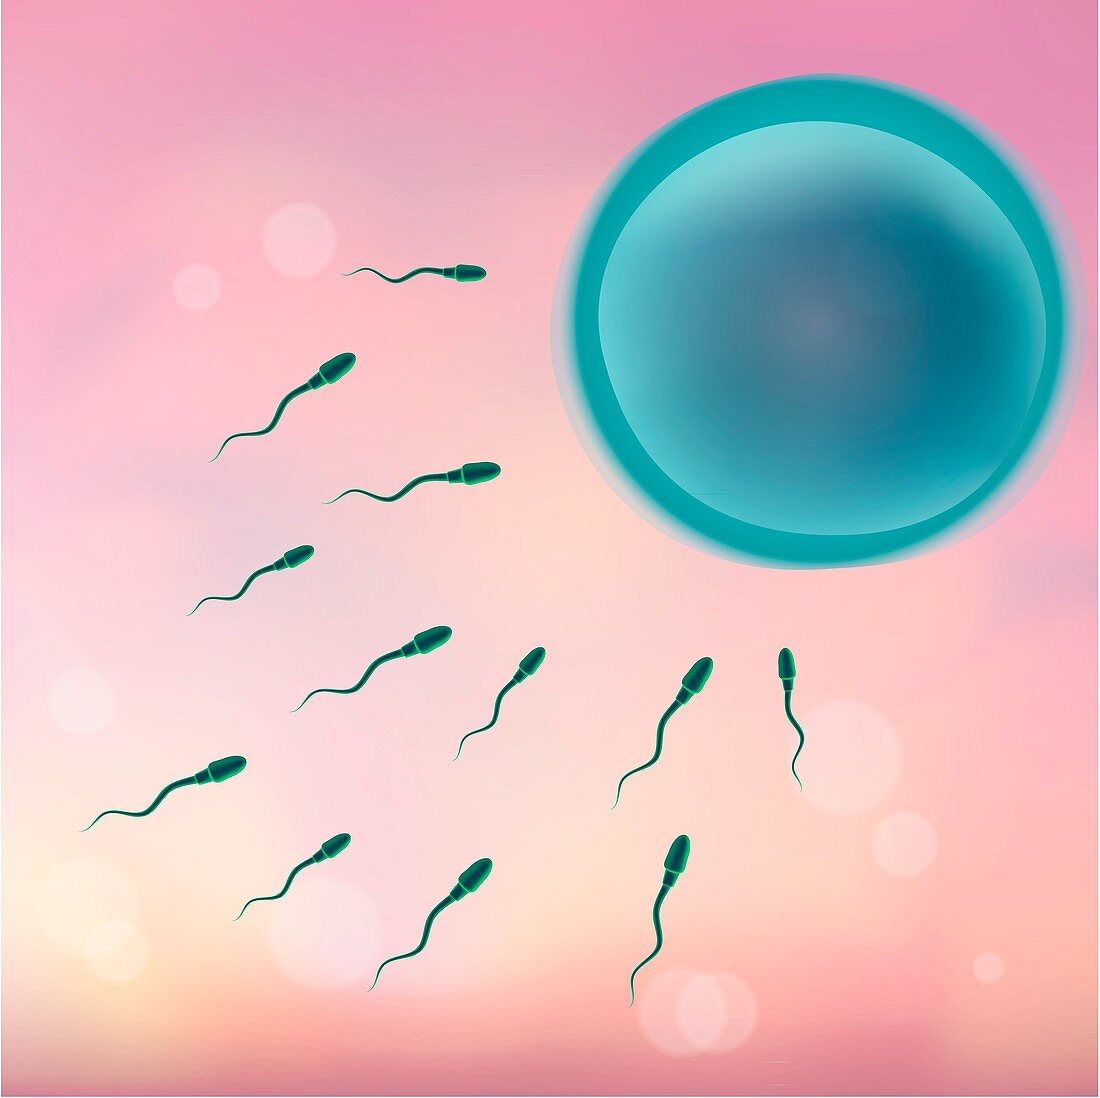 Human sperm and egg, illustration